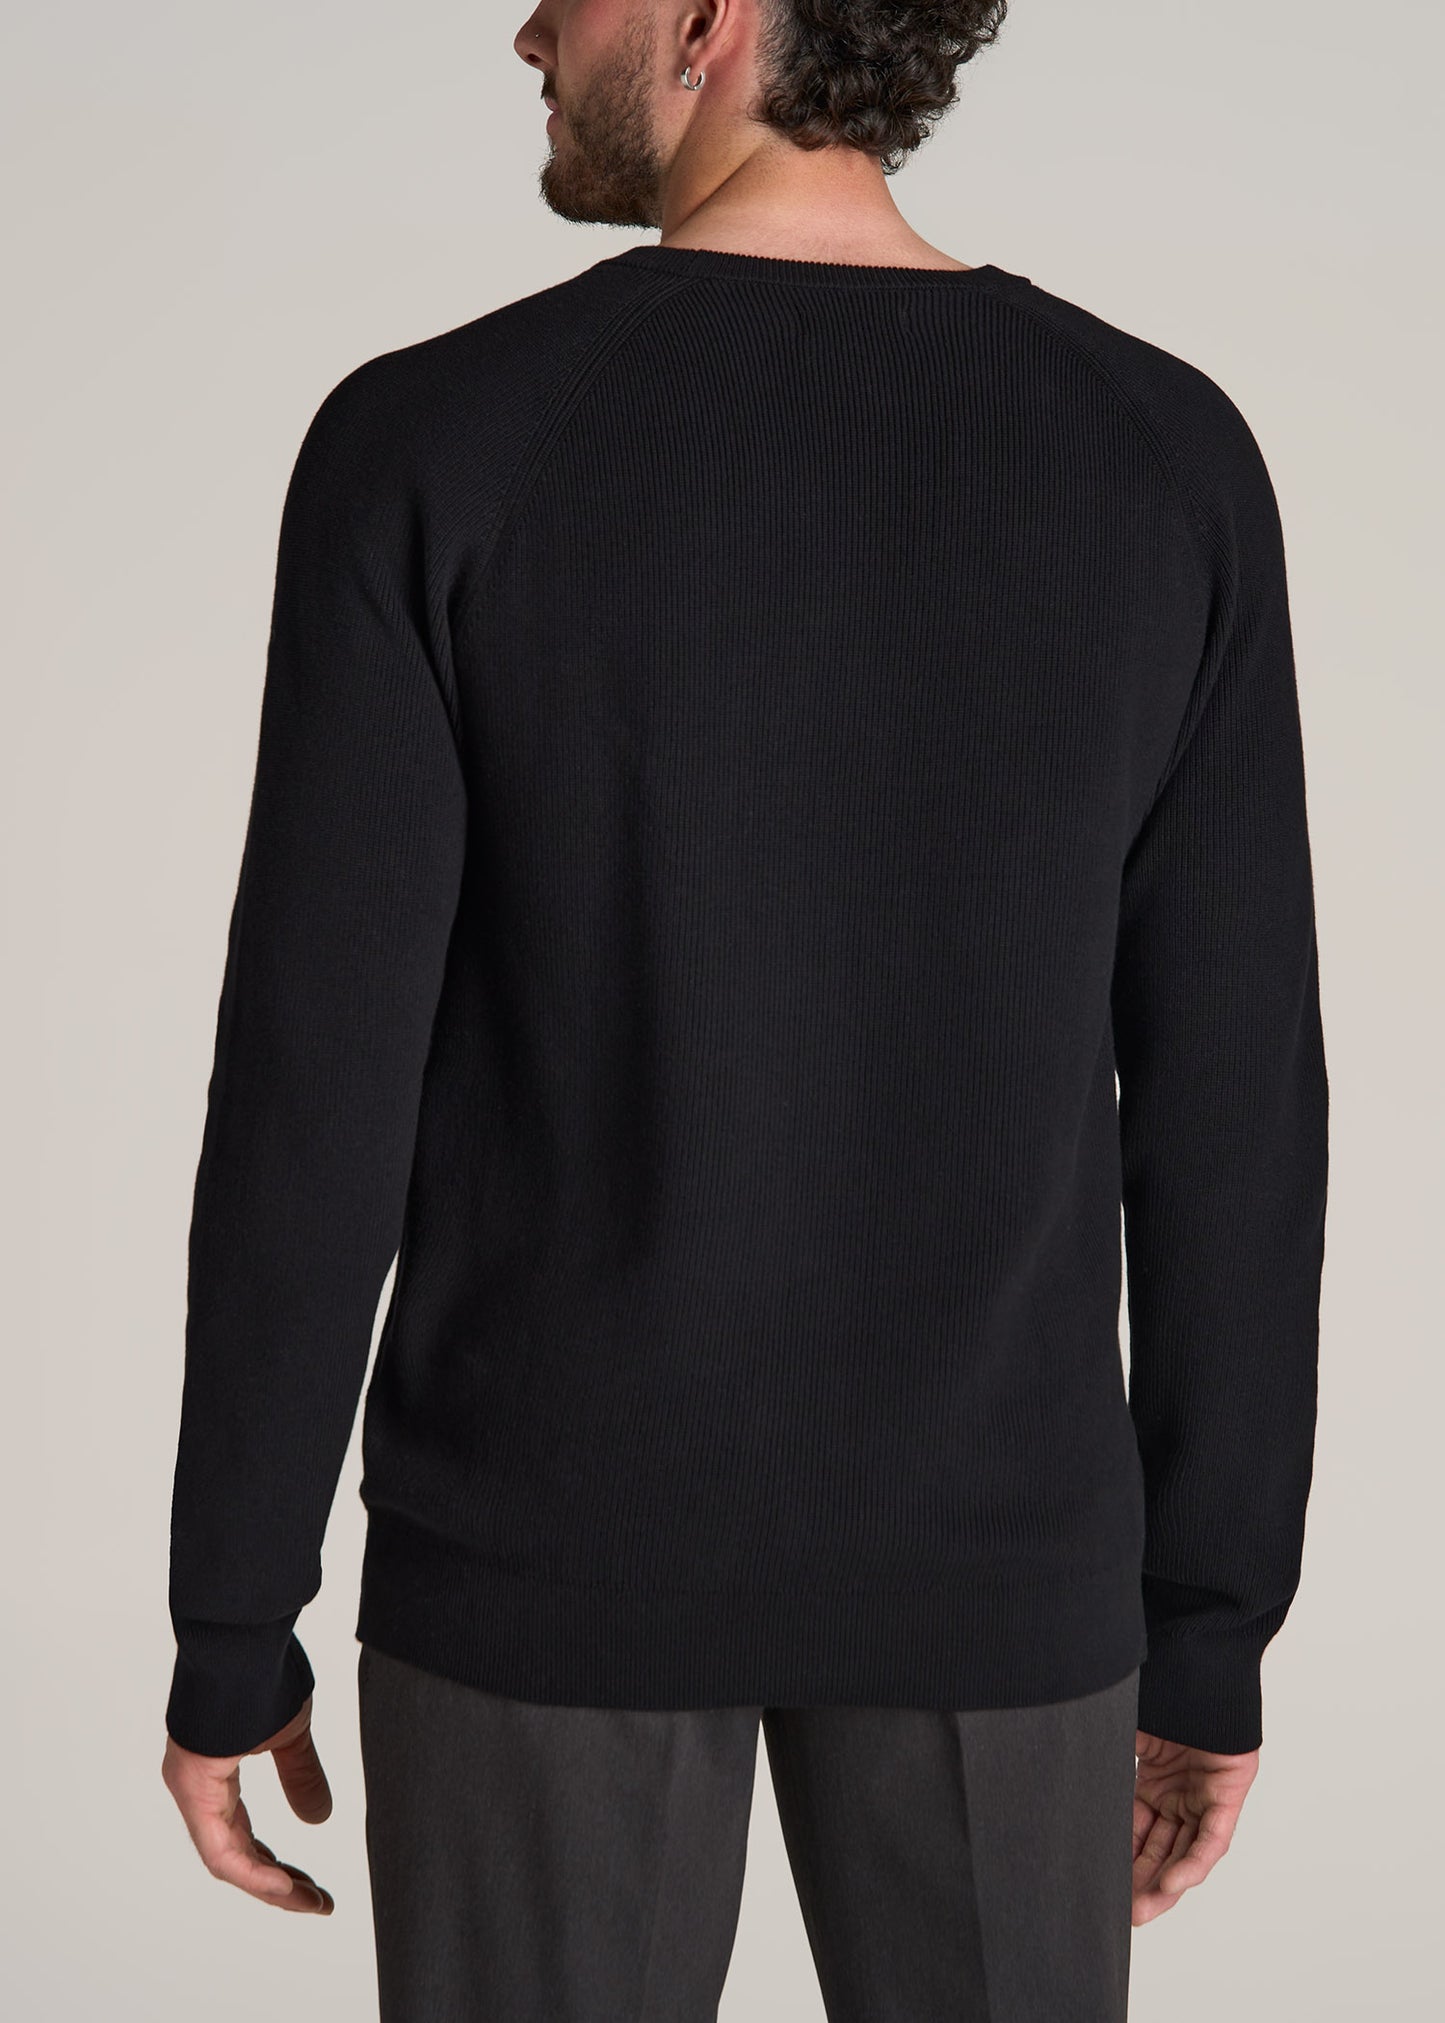 American-Tall-Men-Textured-Knit-Sweater-Black-back